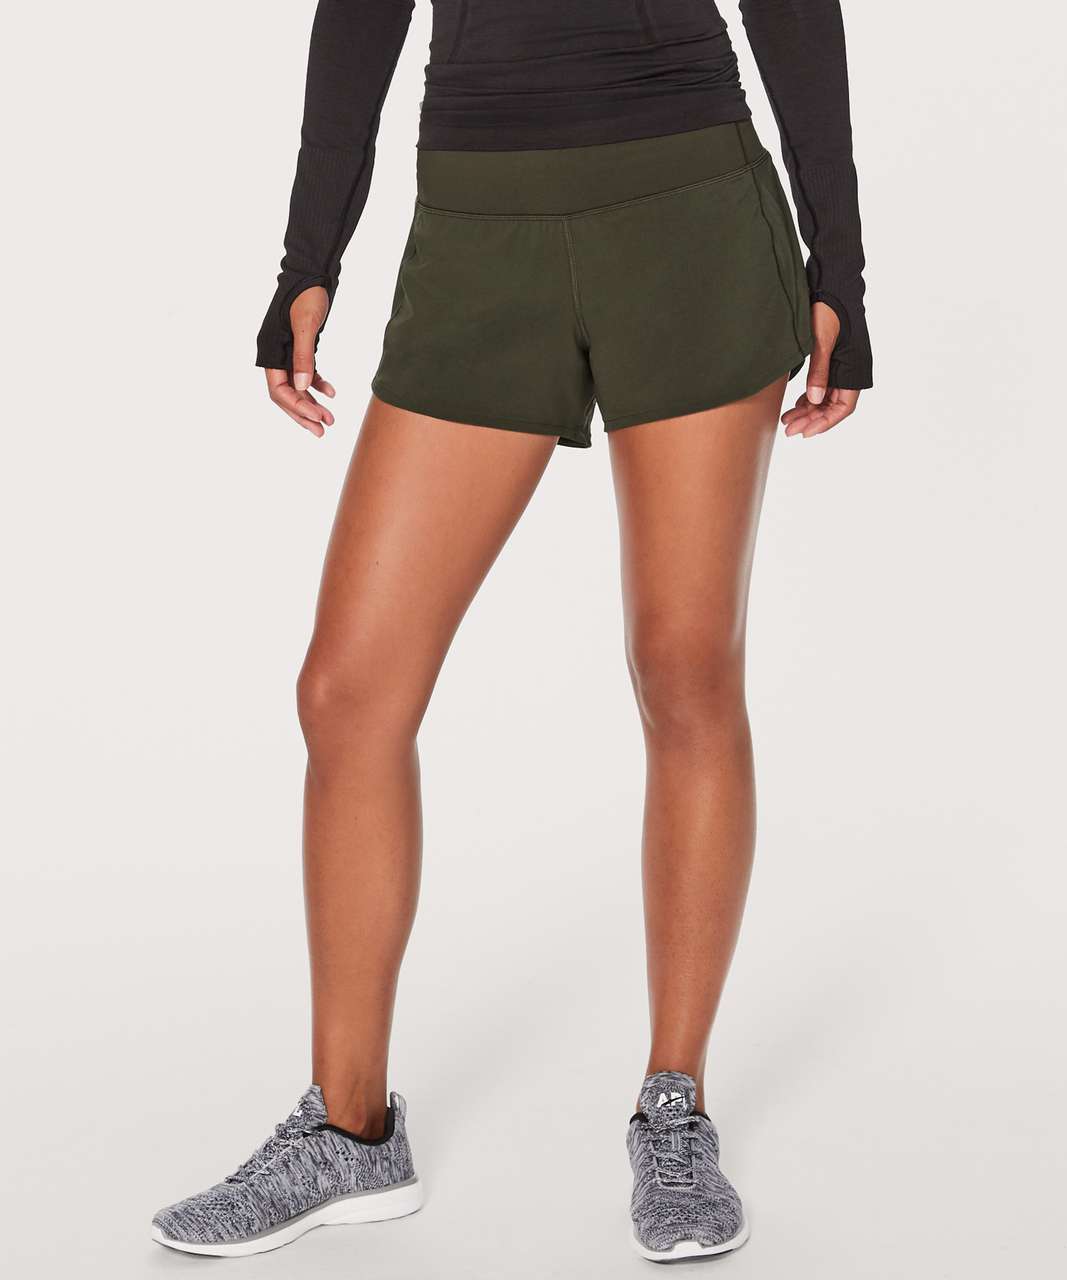 army green lululemon shorts